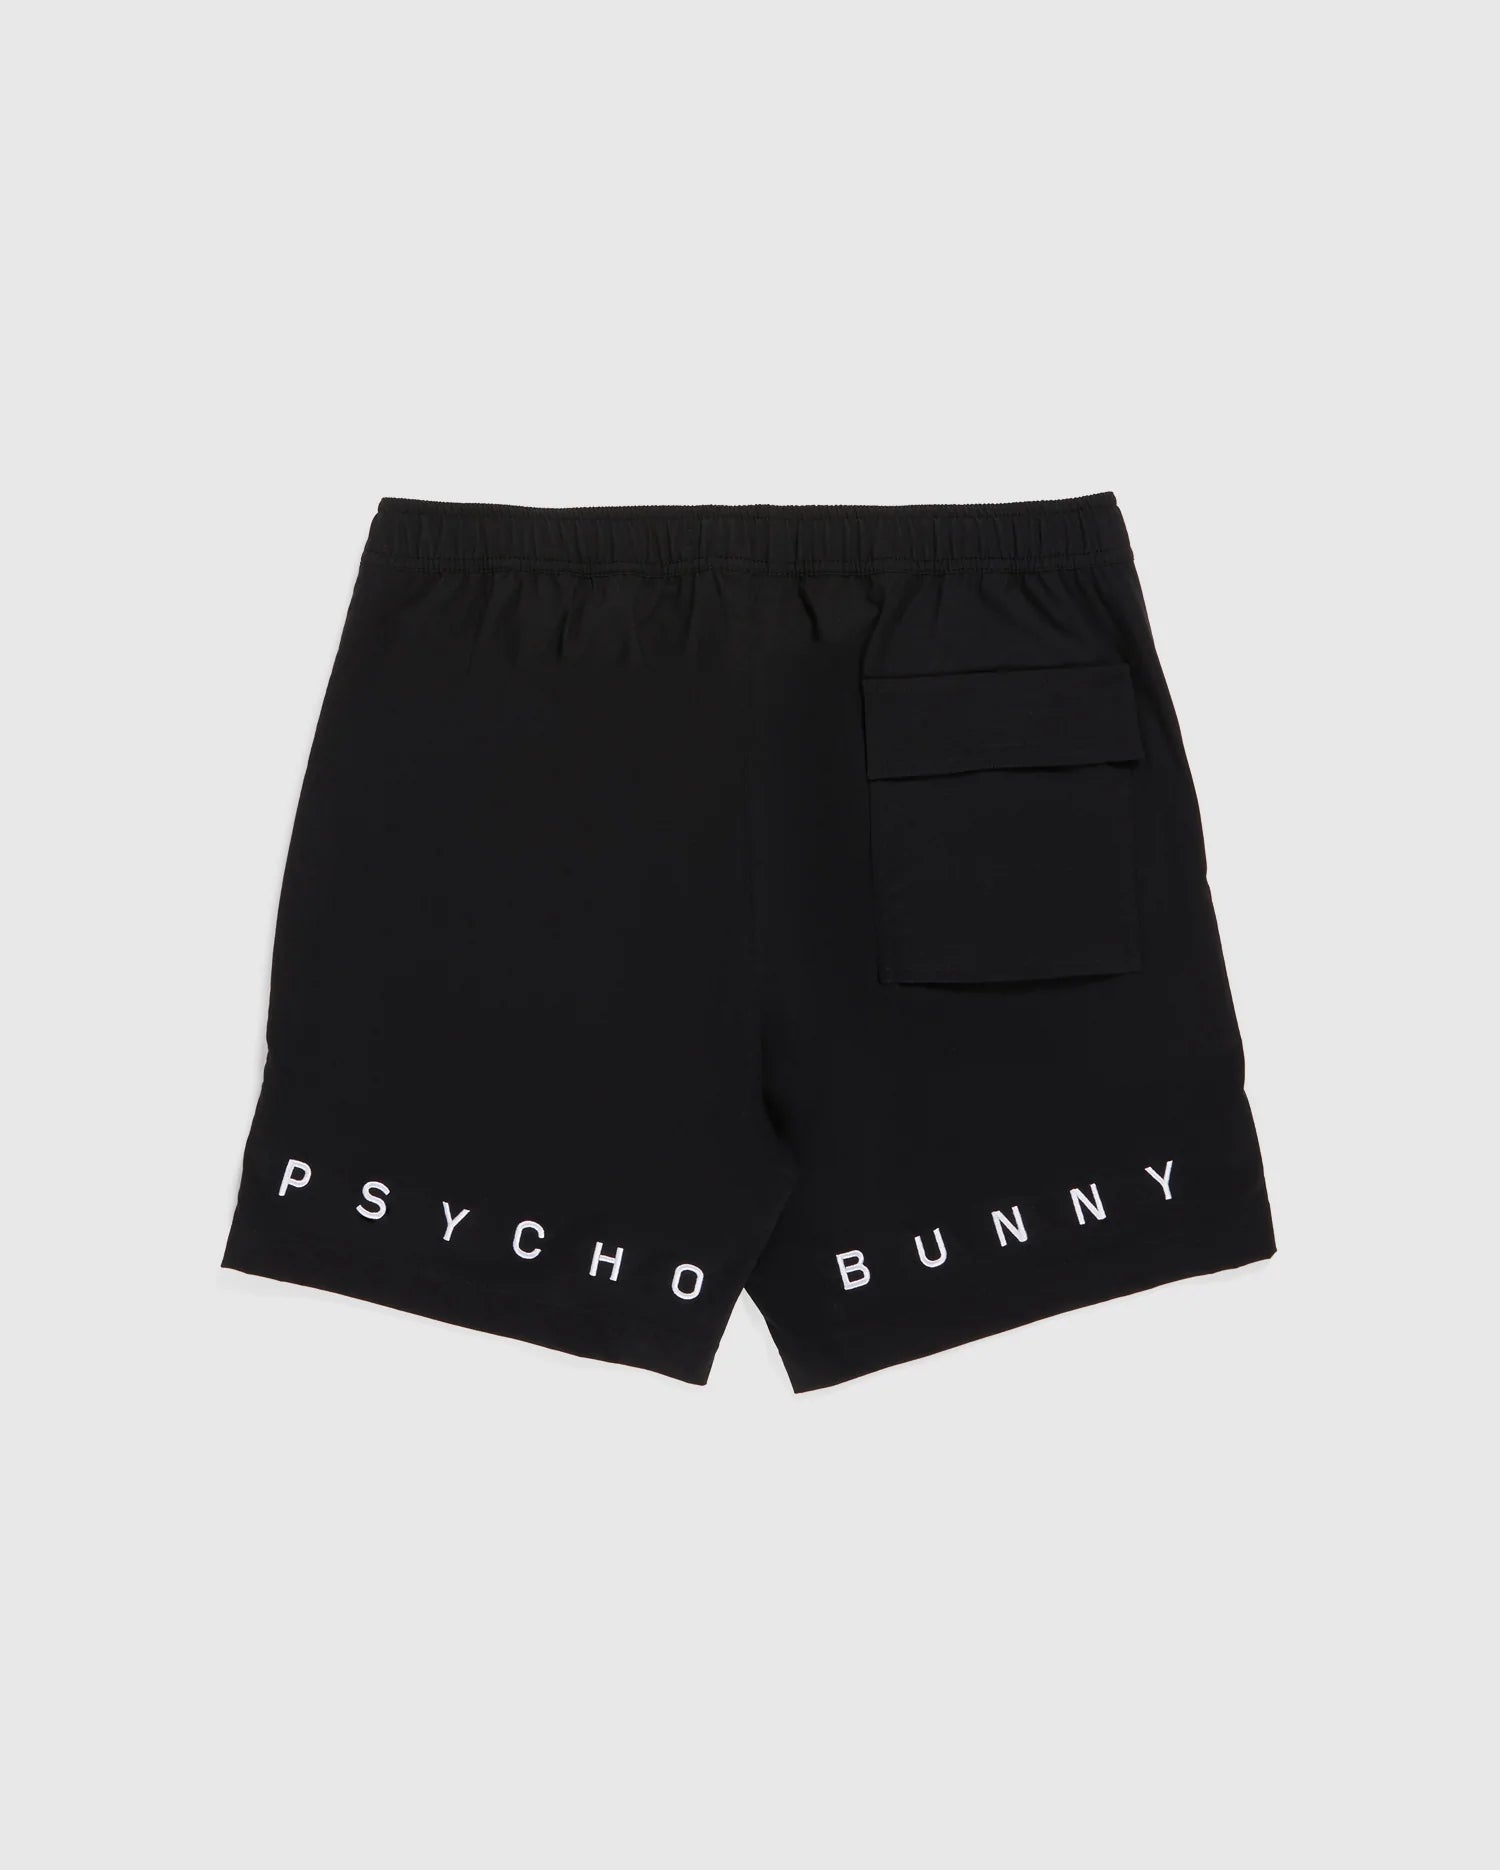 Psycho Bunny Graphic Bunny Print Swim Shorts, $115